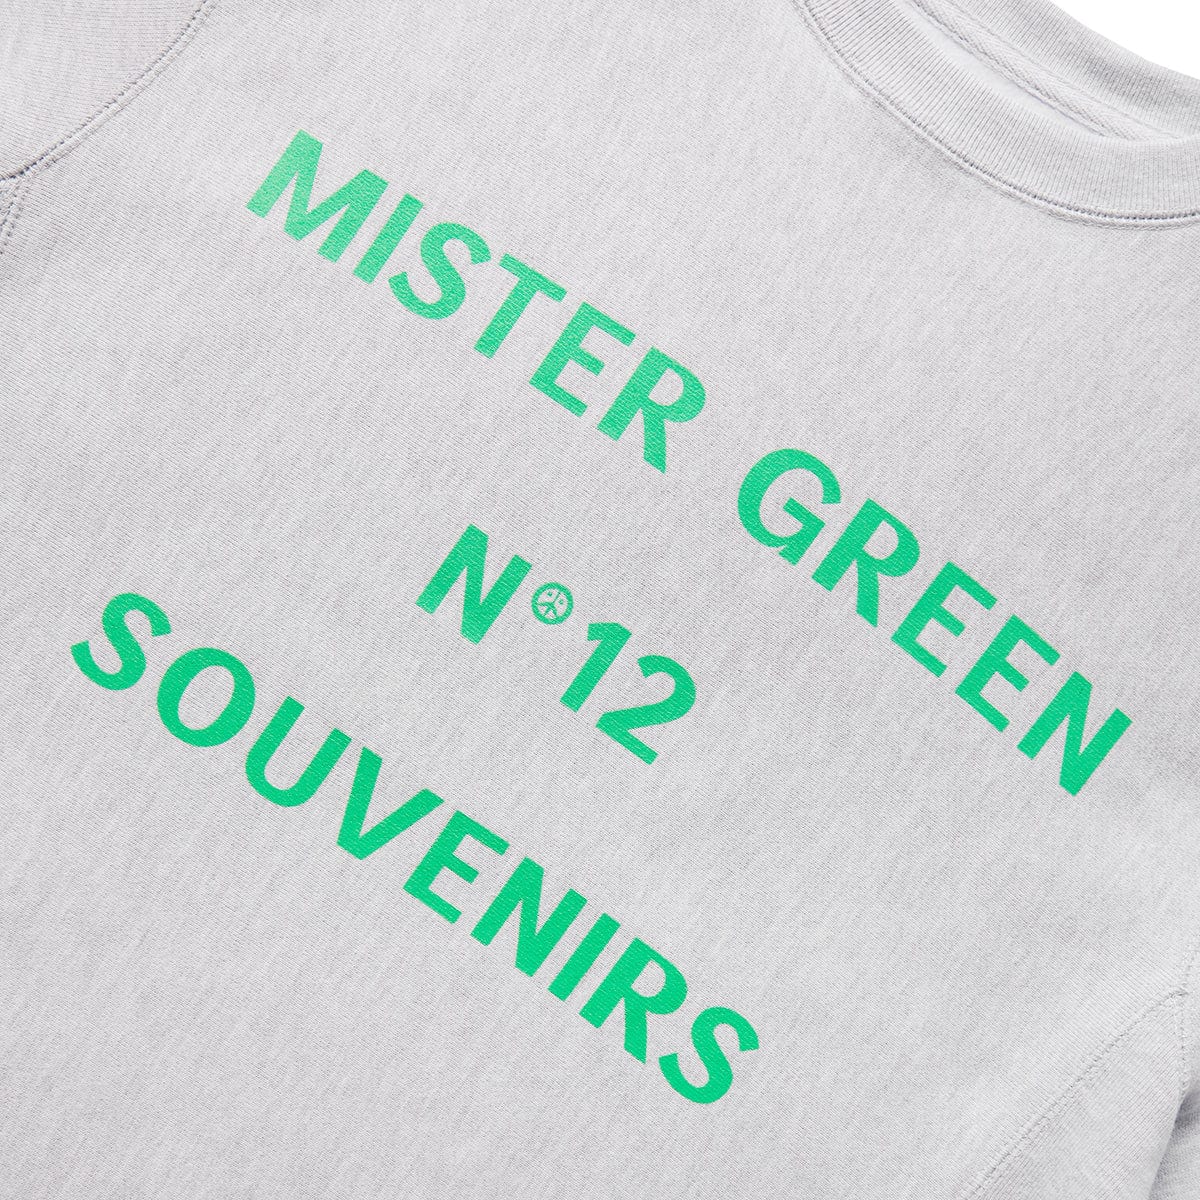 Mister Green Hoodies & Sweatshirts NO 12 SOUVENIRS CREWNECK